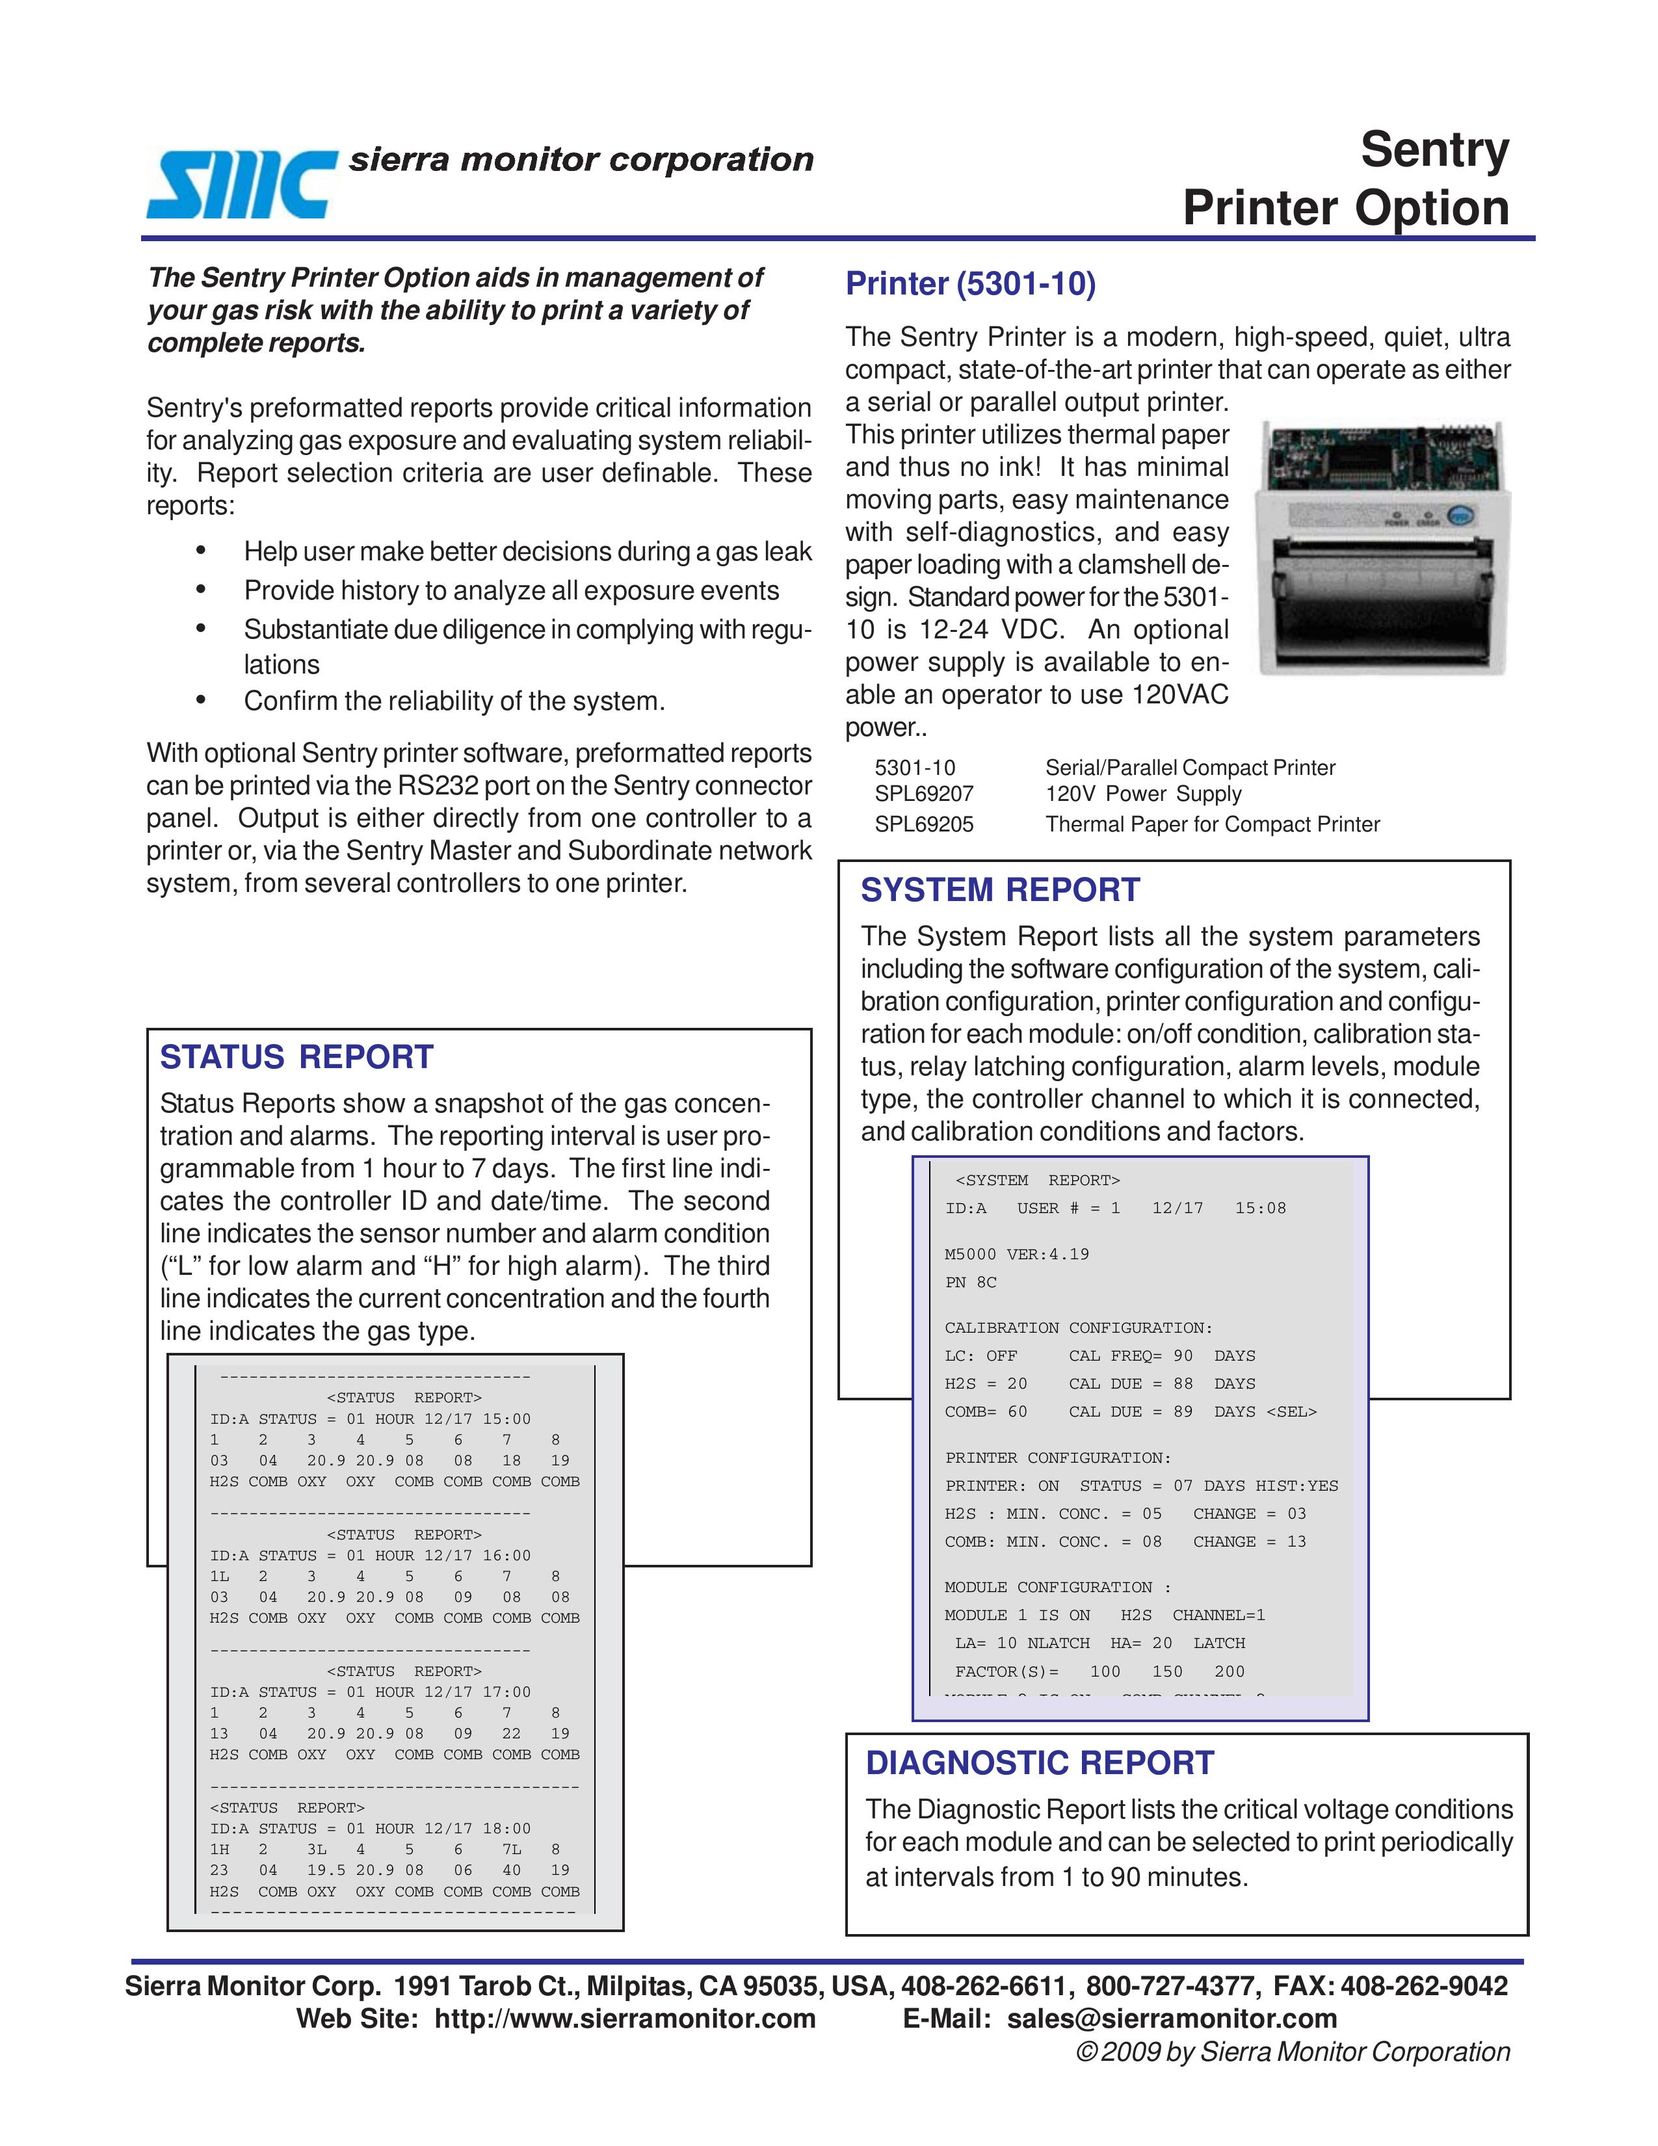 Sierra Monitor Corporation SPL69207 Printer User Manual